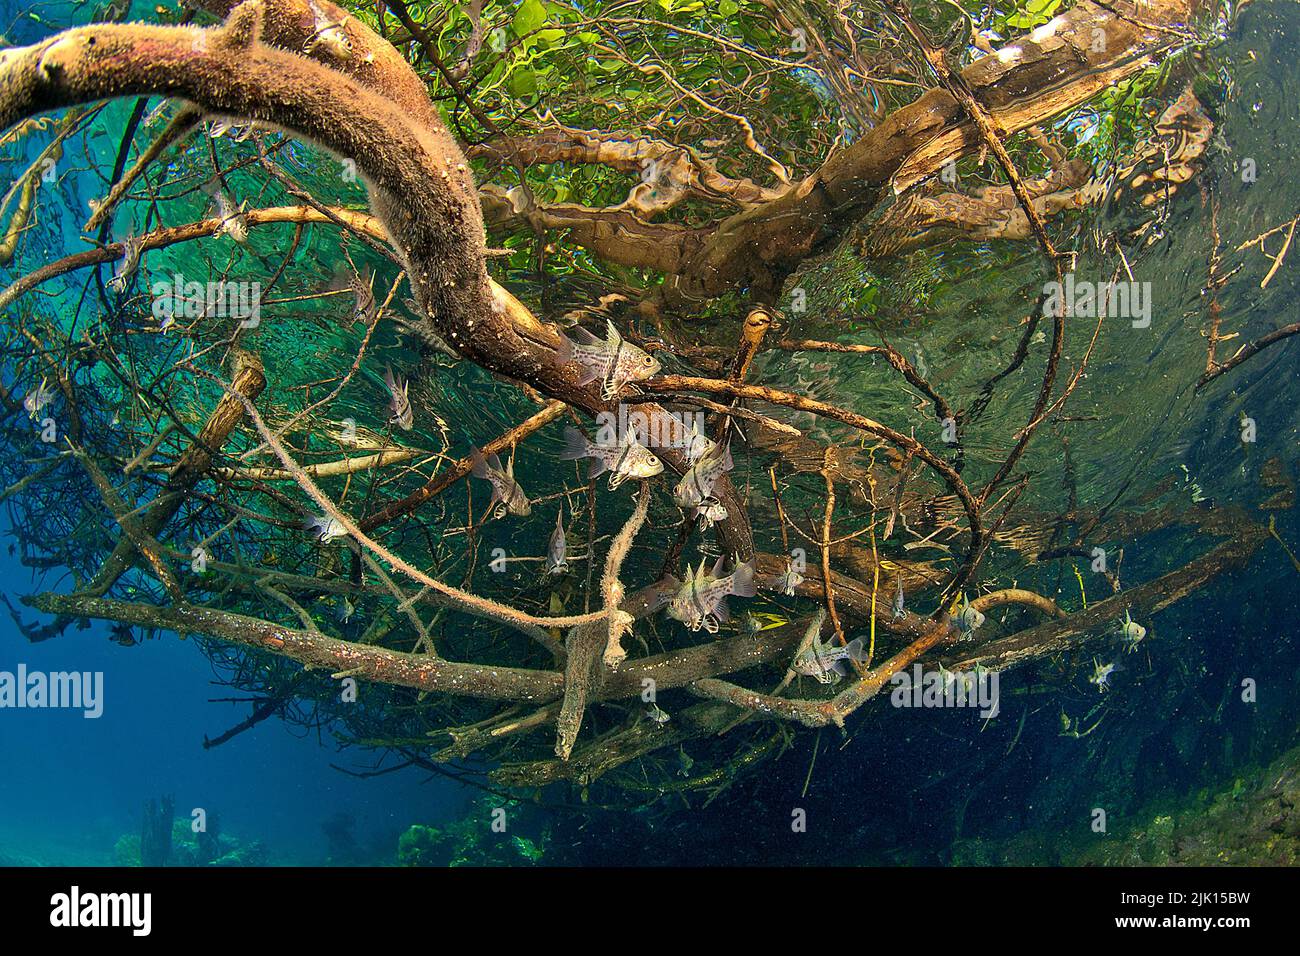 Nursery, giovane orbico Cardinalfish (Sphaeramia orbicularis) che si nasconde tra le radici di mangrovie rosse (Rhizophora mangle), isole Russel, isole Salomone Foto Stock